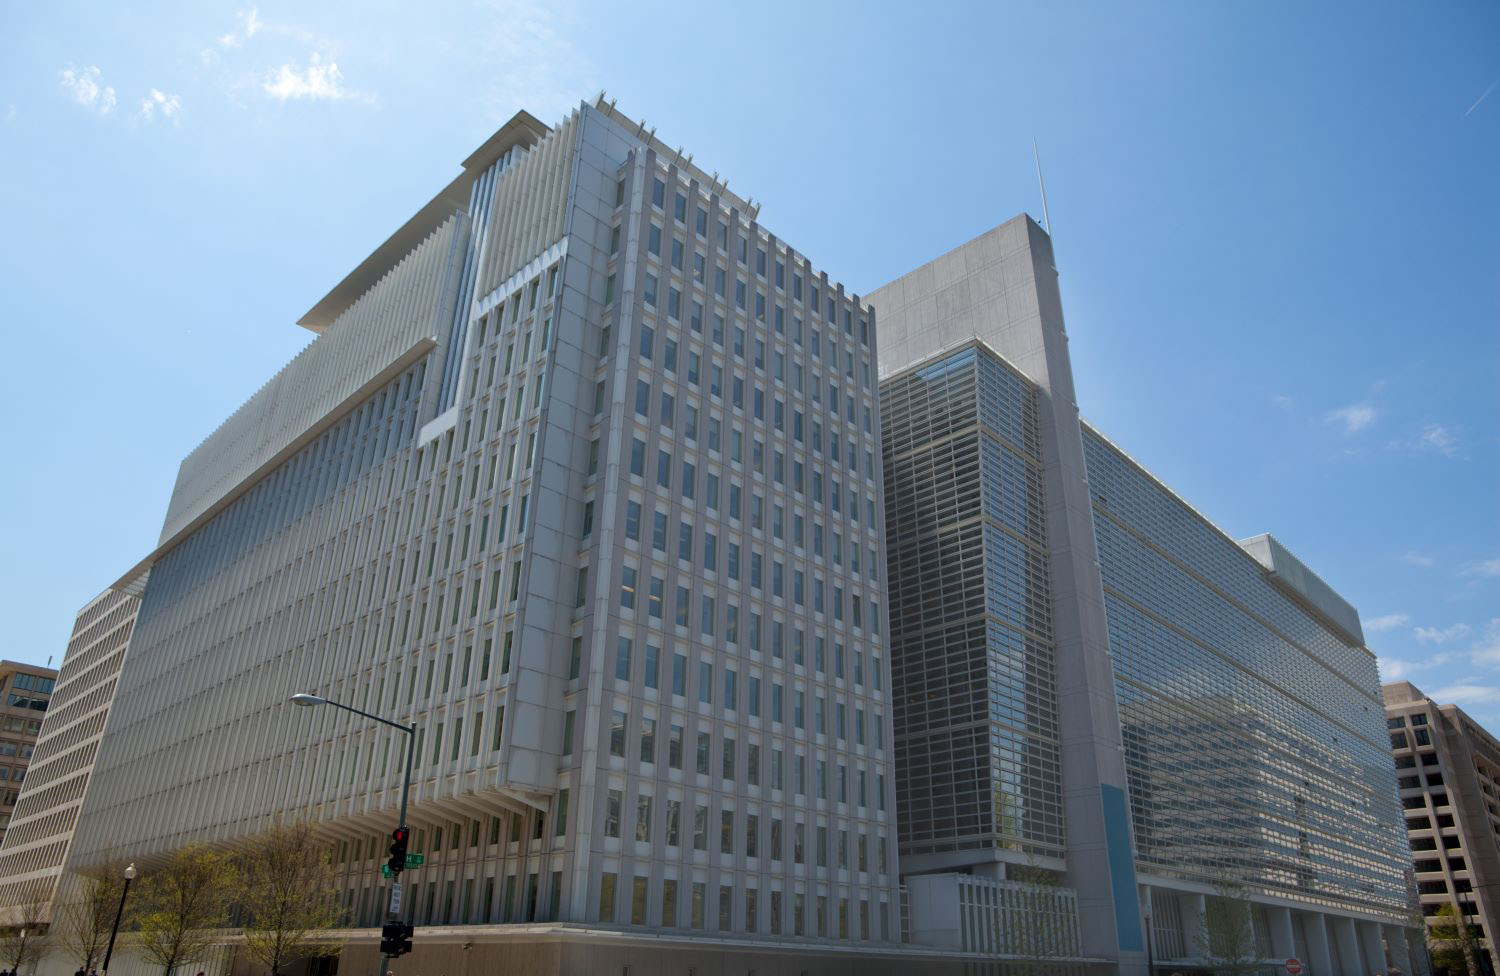 North End Office Building World Bank Headquarters, Washington